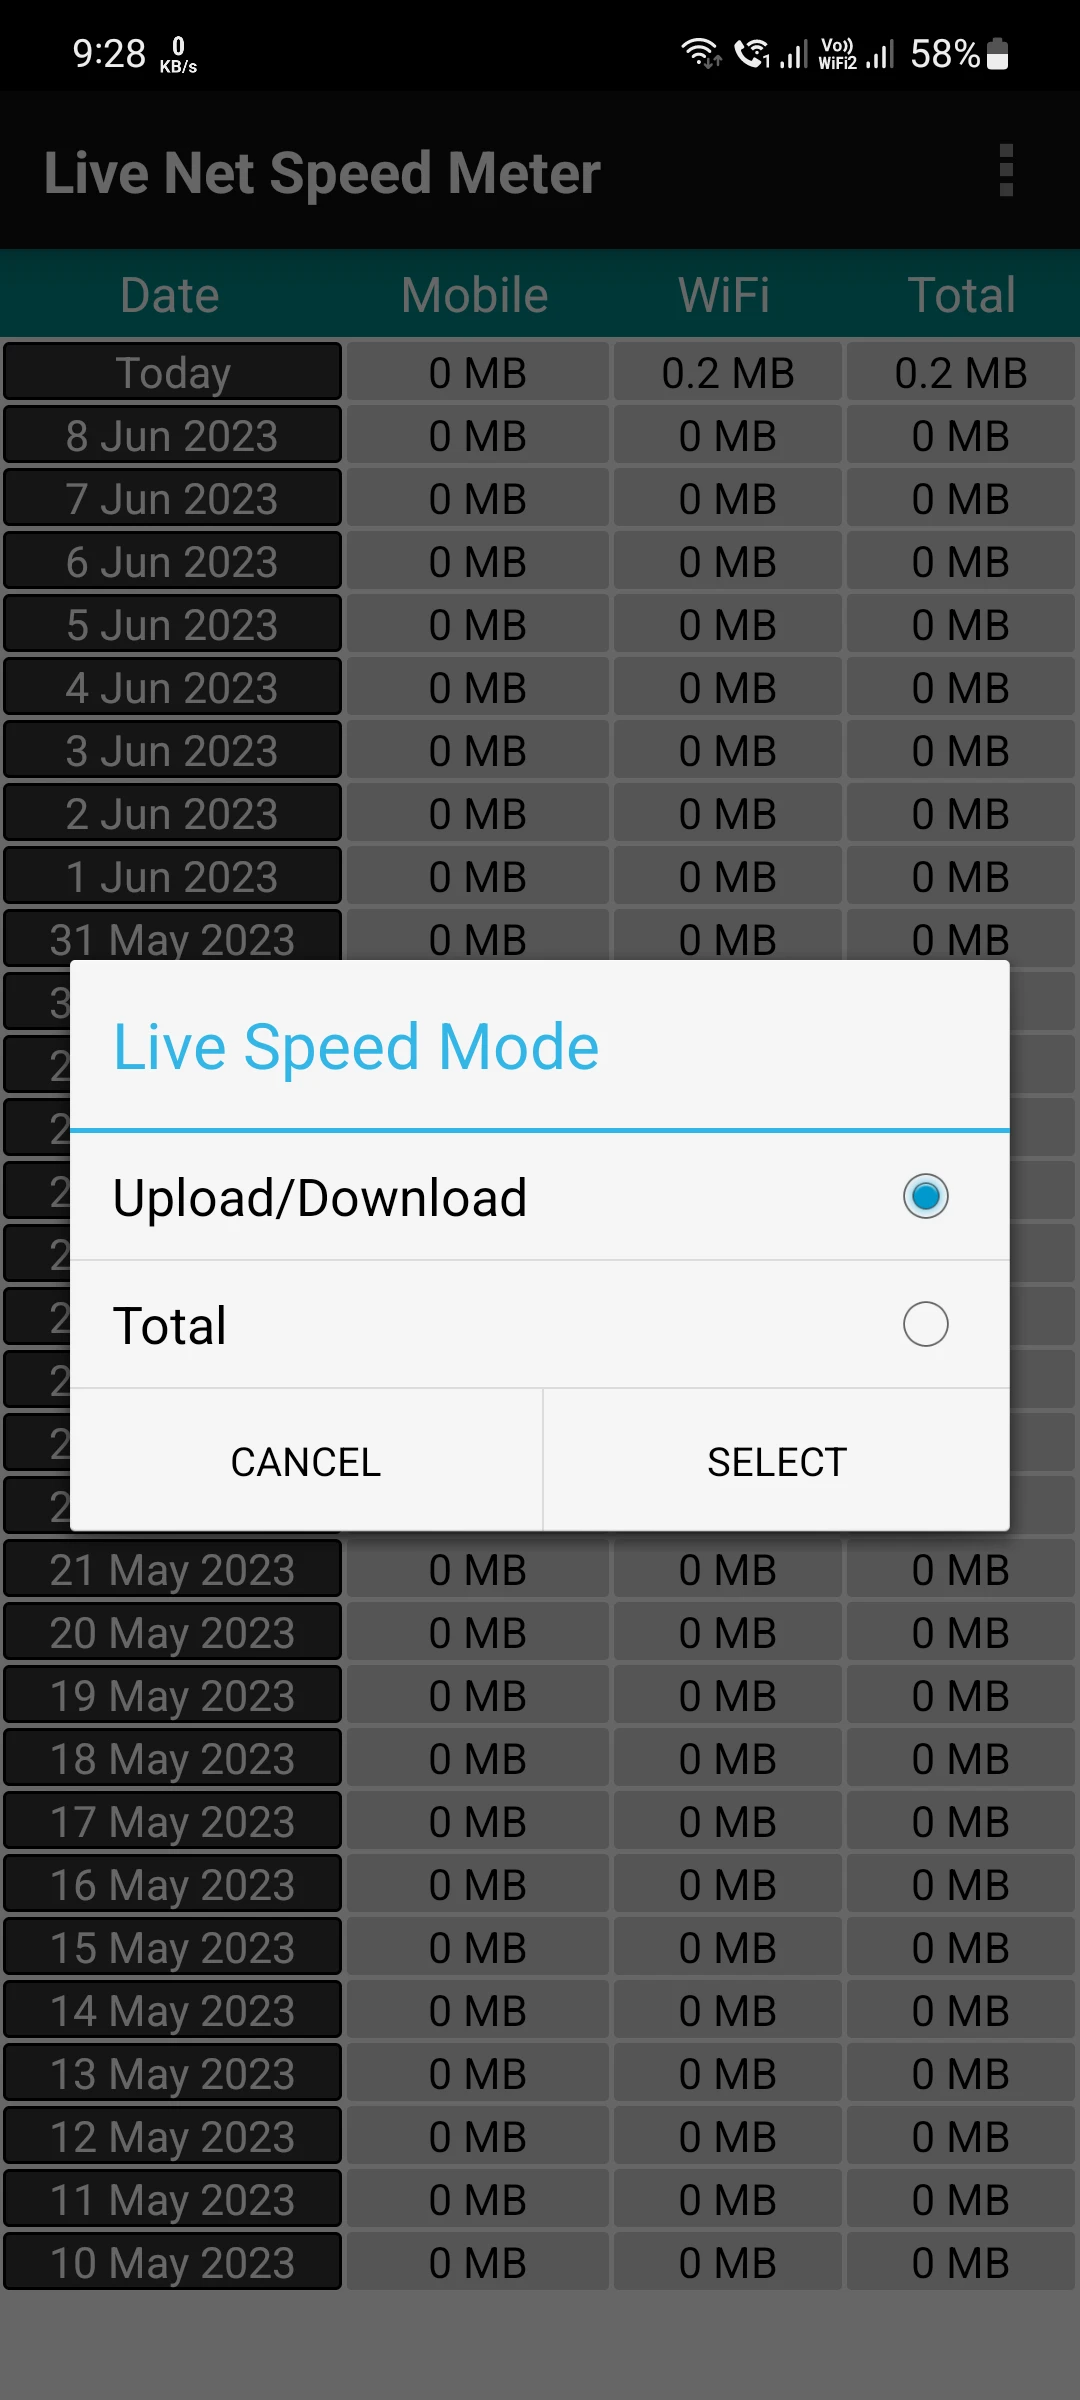 Live Speed Mode Option